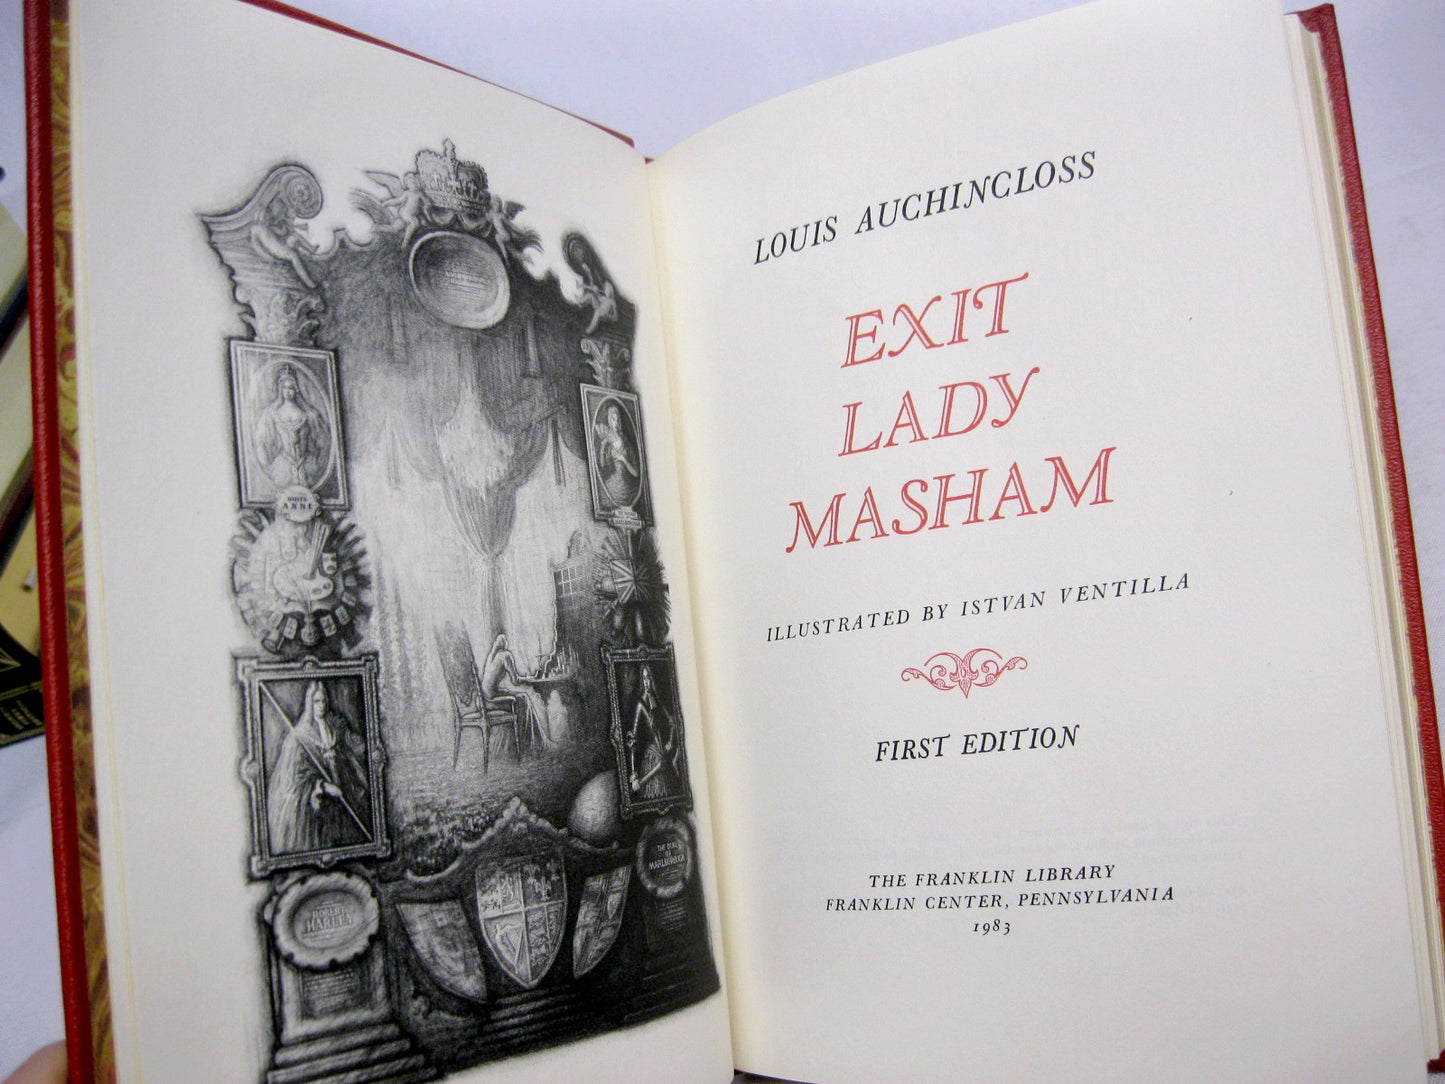 Exit Lady Masham by Louis Auchincloss